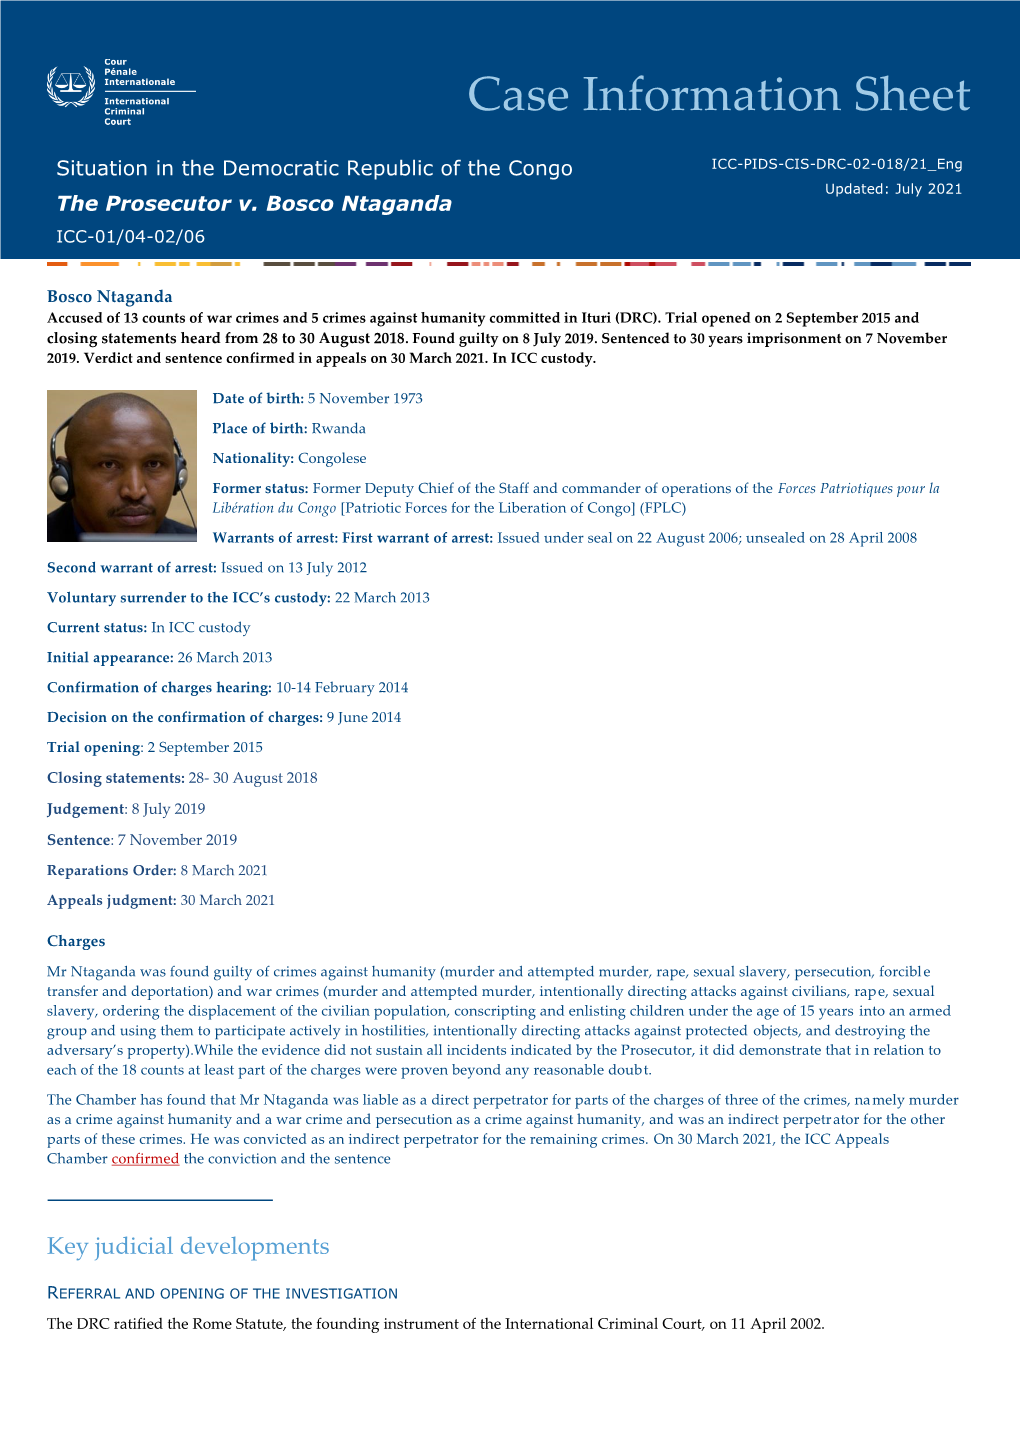 The Prosecutor V. Bosco Ntaganda ICC-01/04-02/06